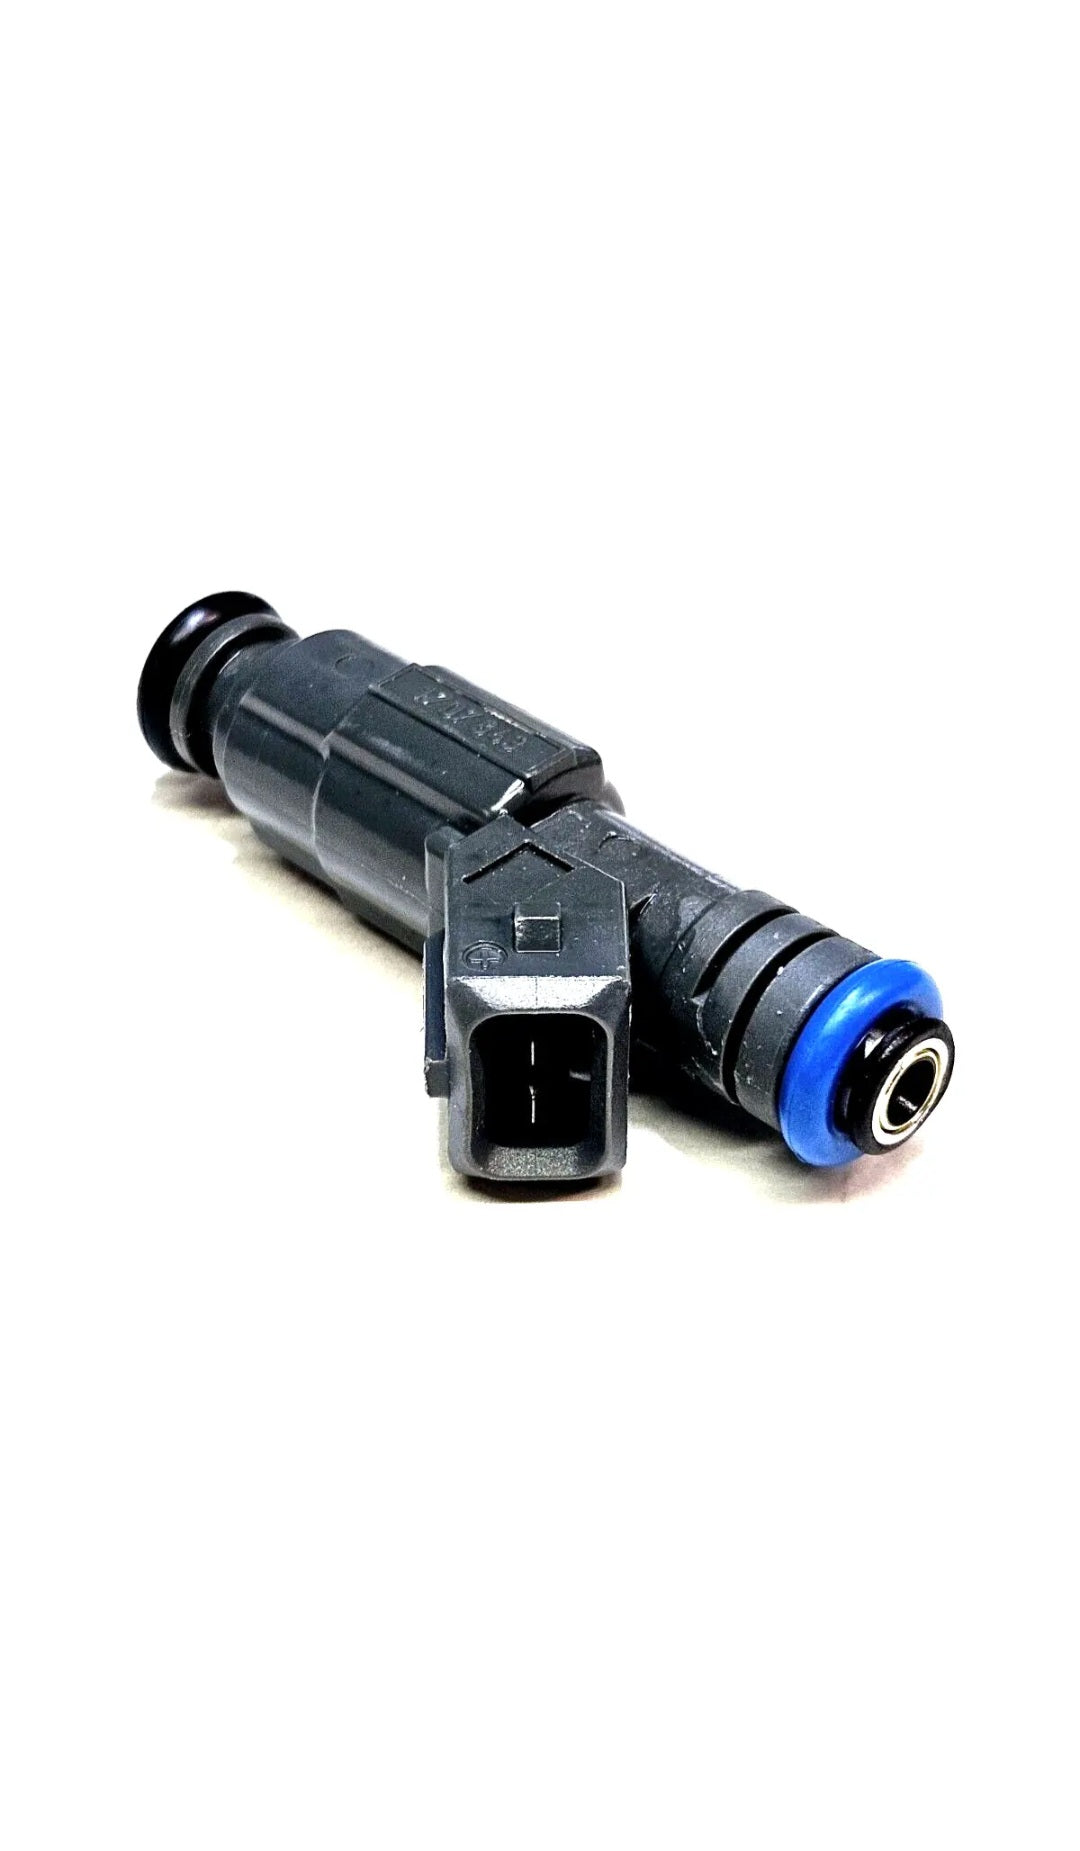 Single Genuine Bosch 0280155823 / 1707843 / MJY000060 fuel injector